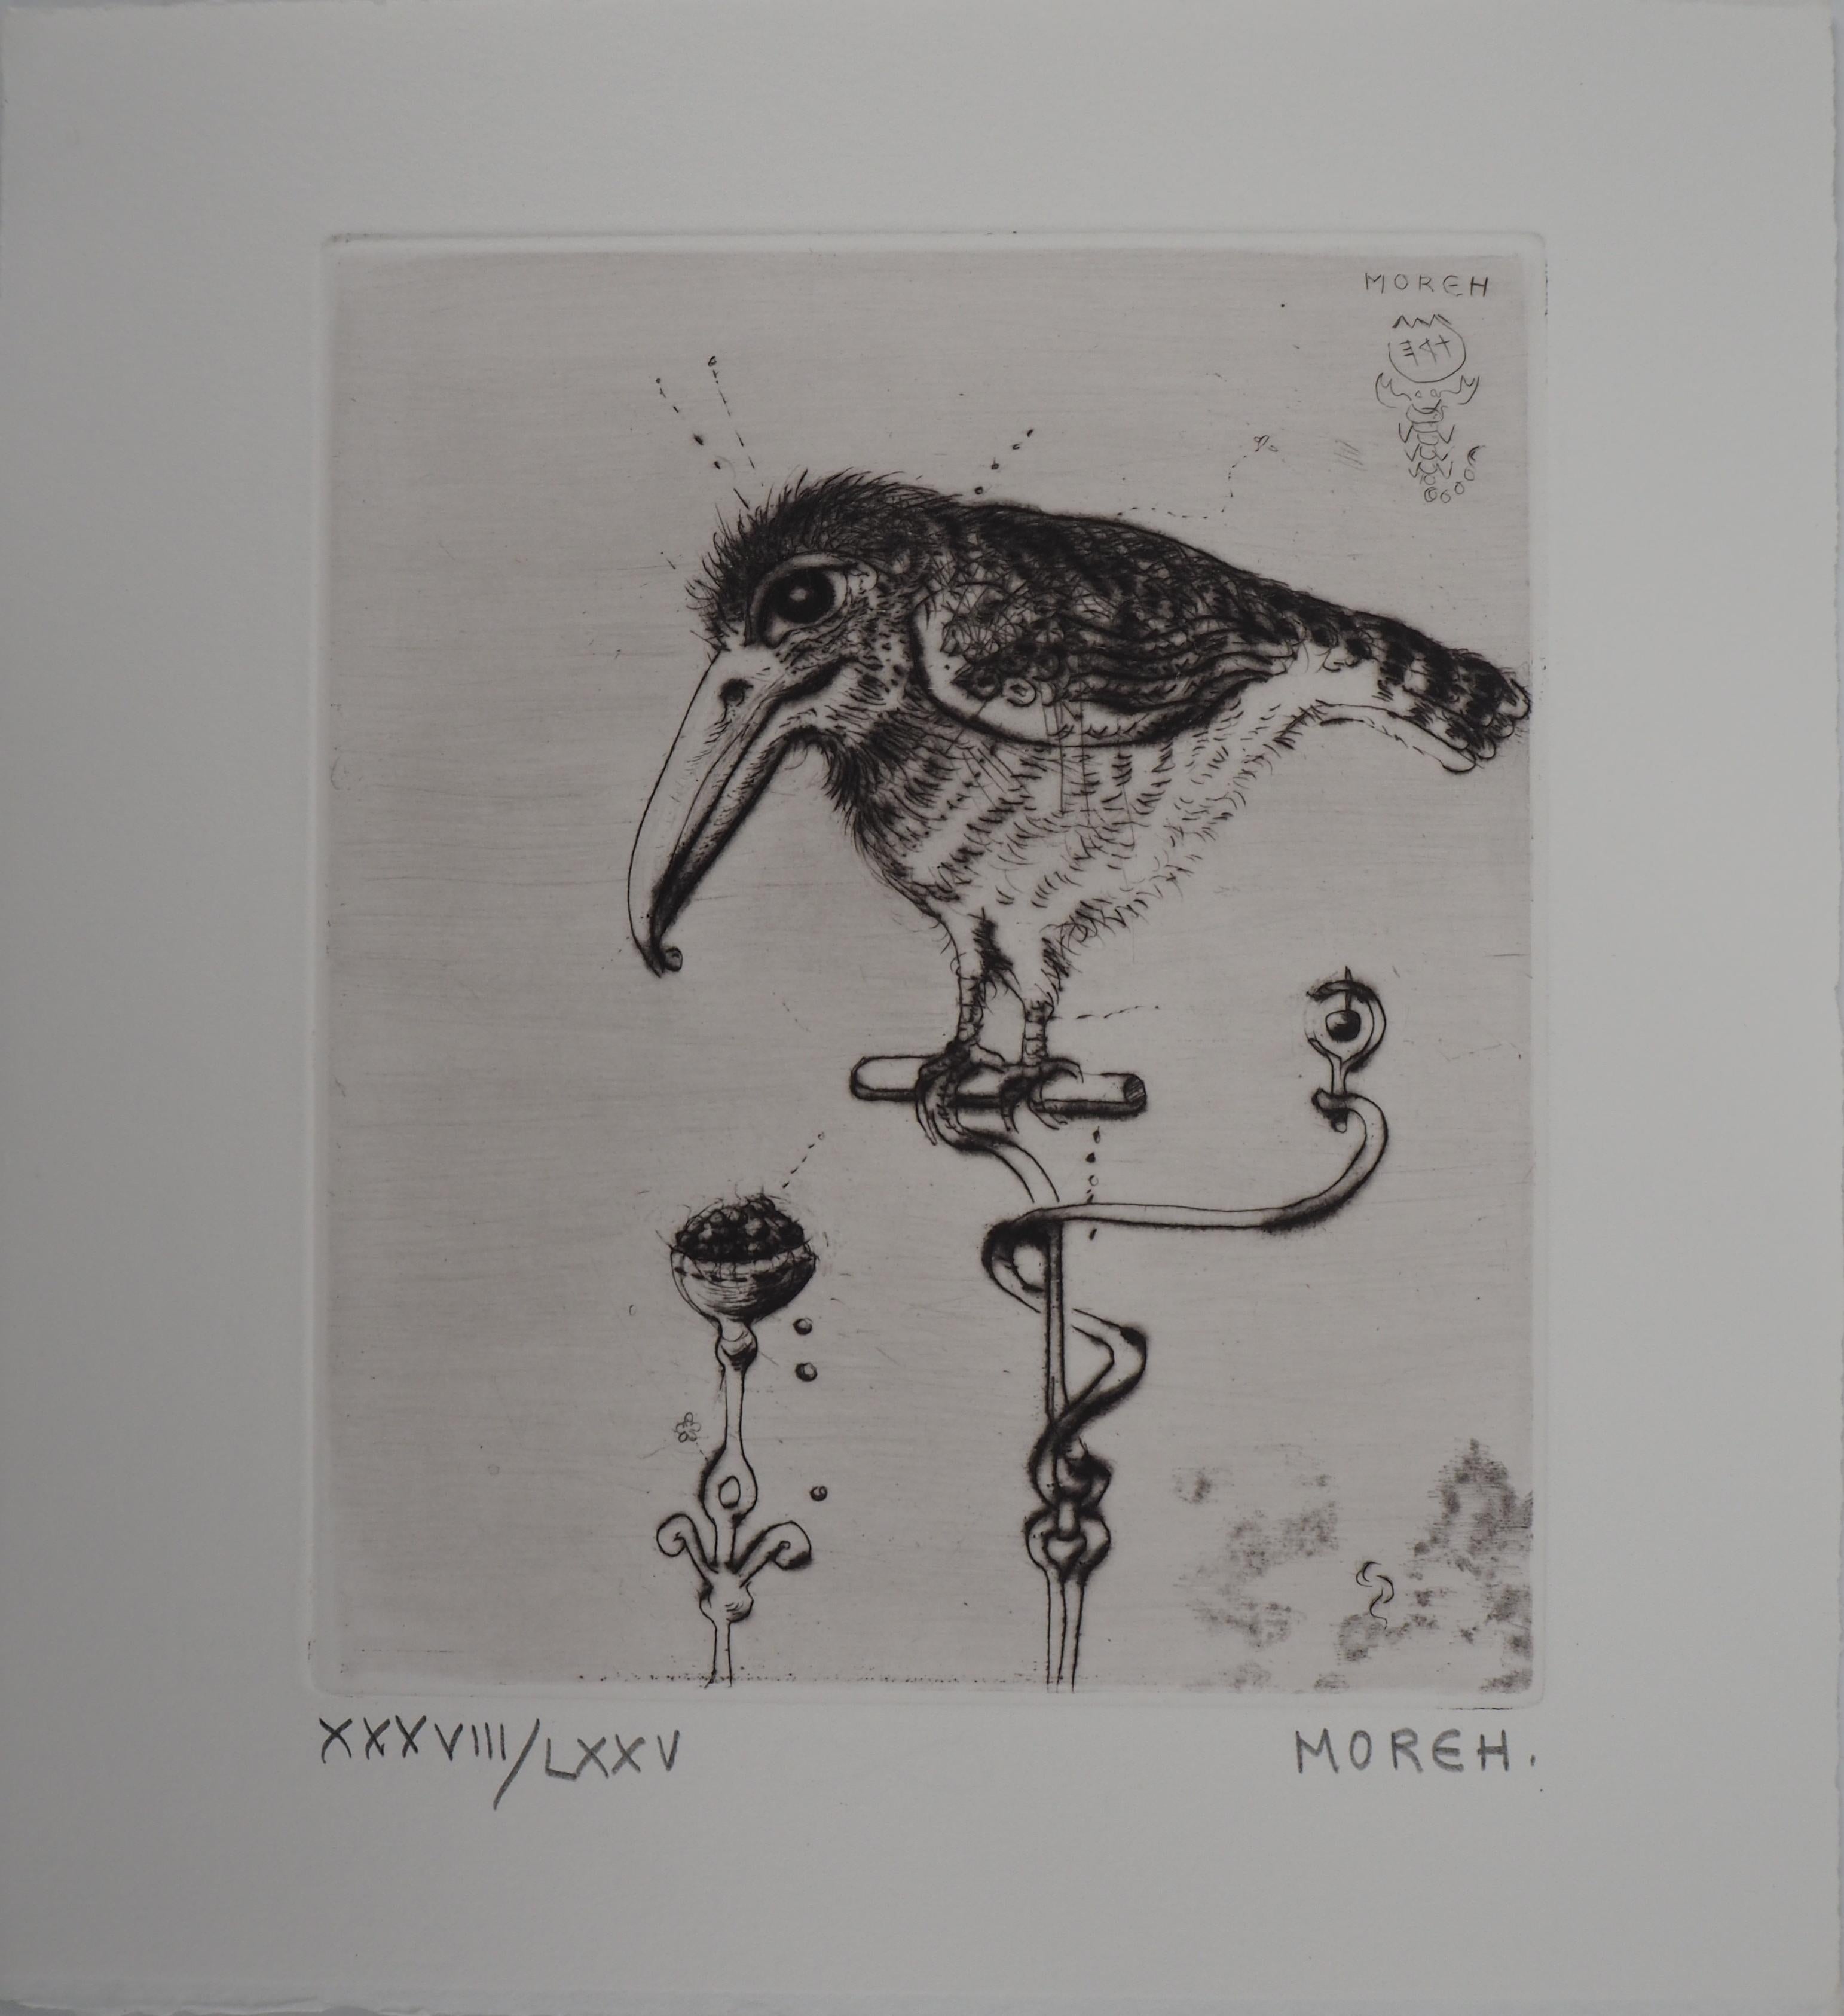 L'uccellino - Acquaforte originale firmata a mano, Ltd 75 copie